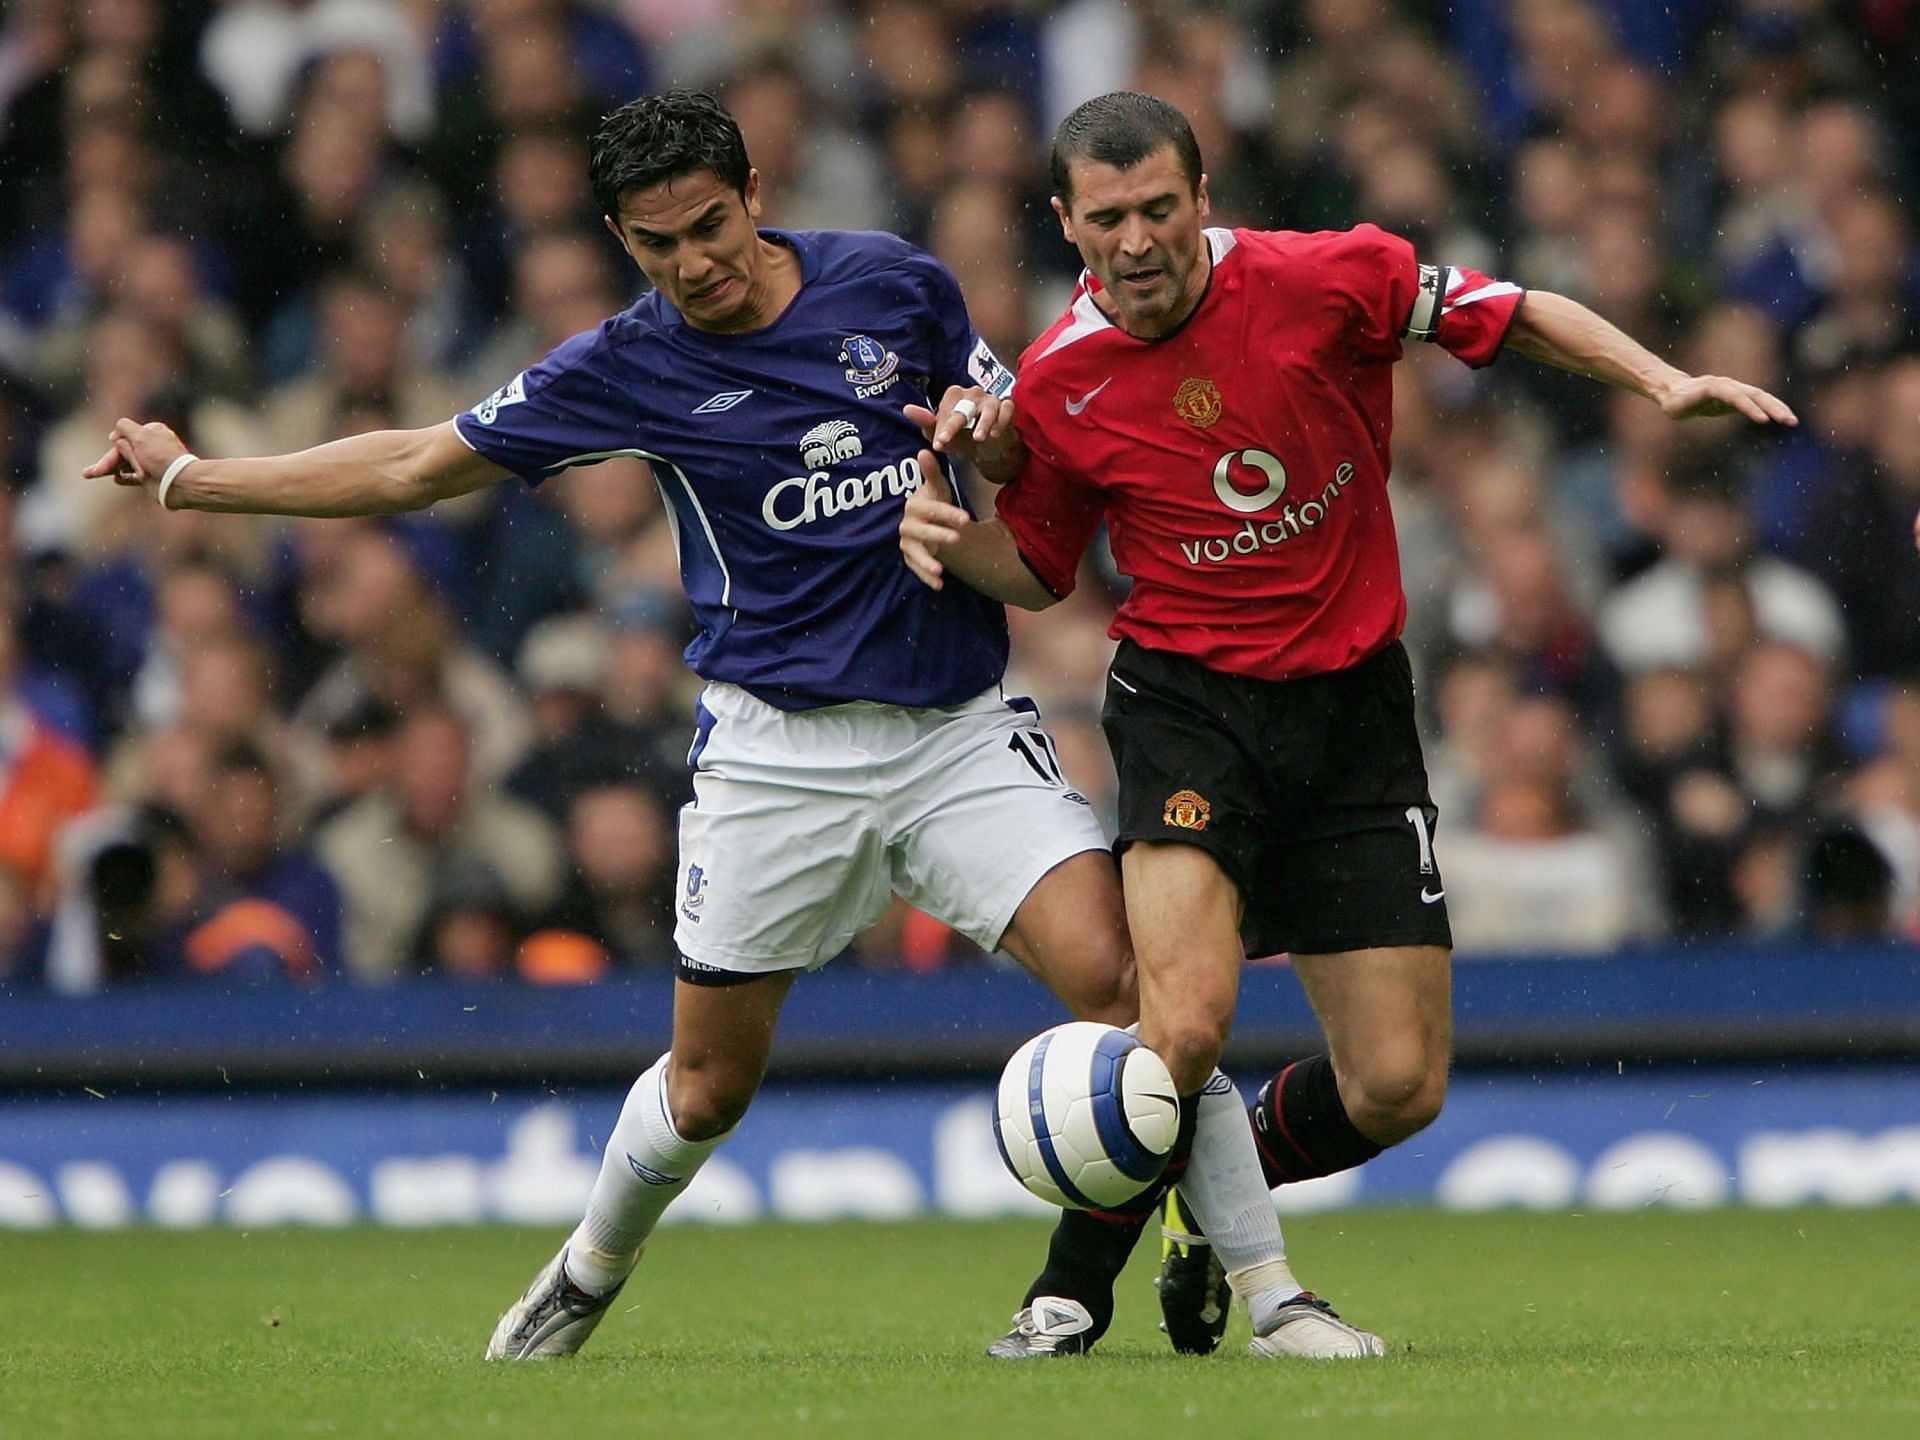 Keane won seven Premier League titles alongside Sir Alex Ferguson